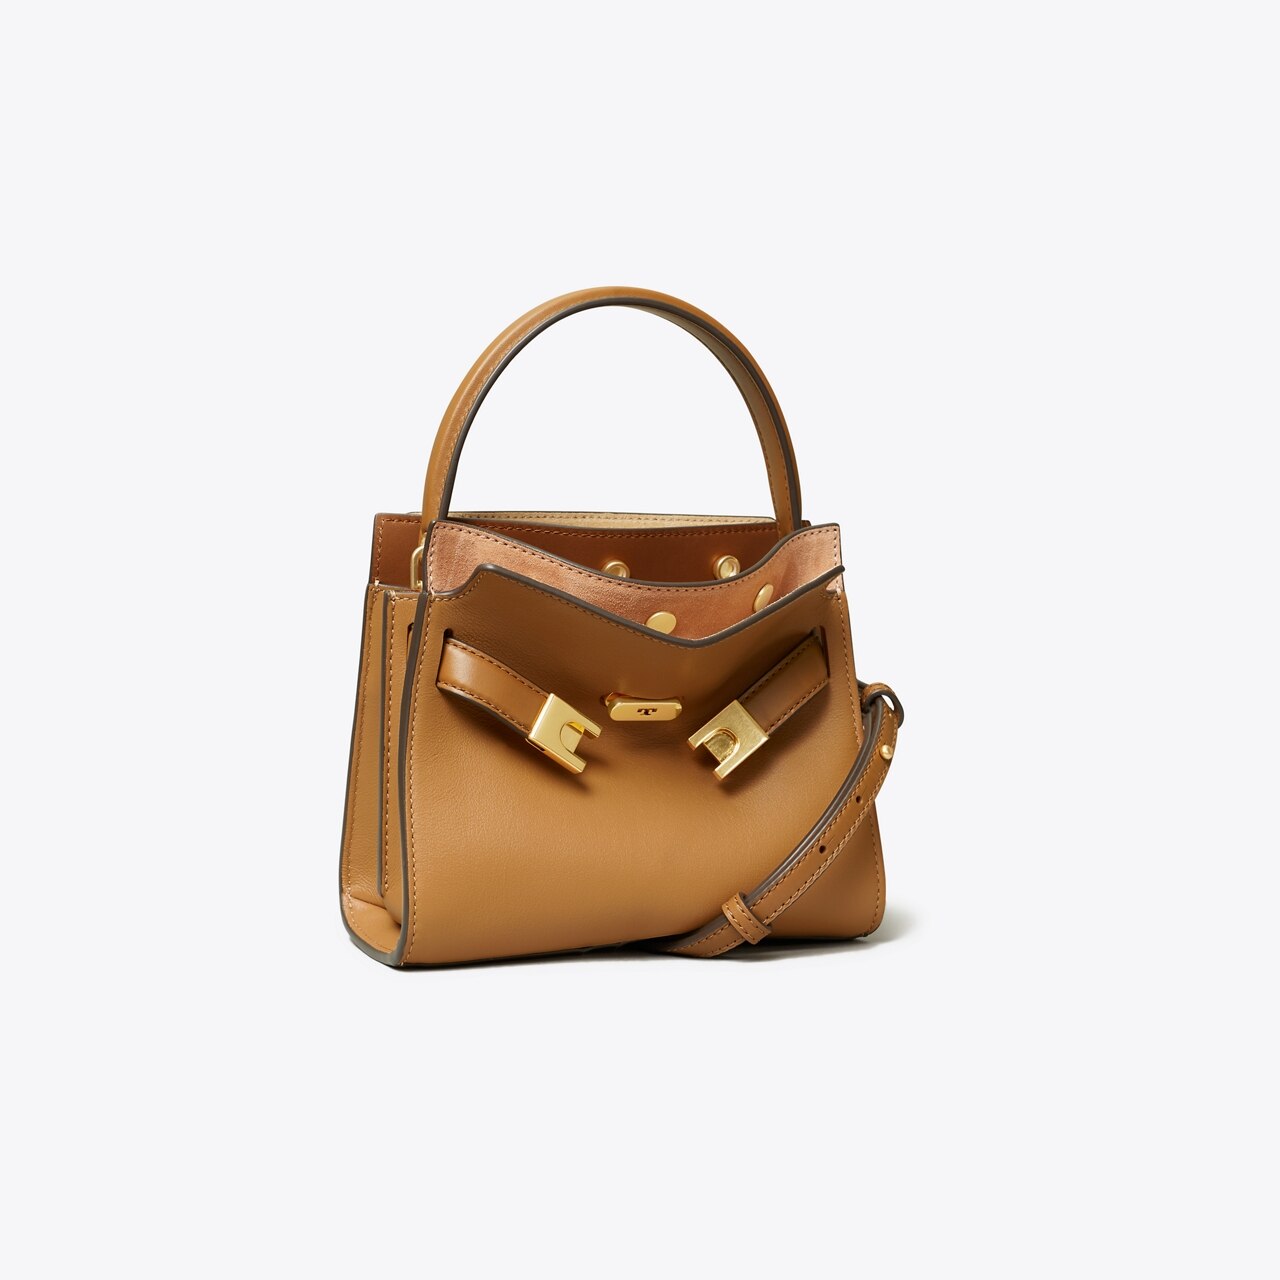 Tory Burch Mini Lee Radziwill Leather Bag, $498